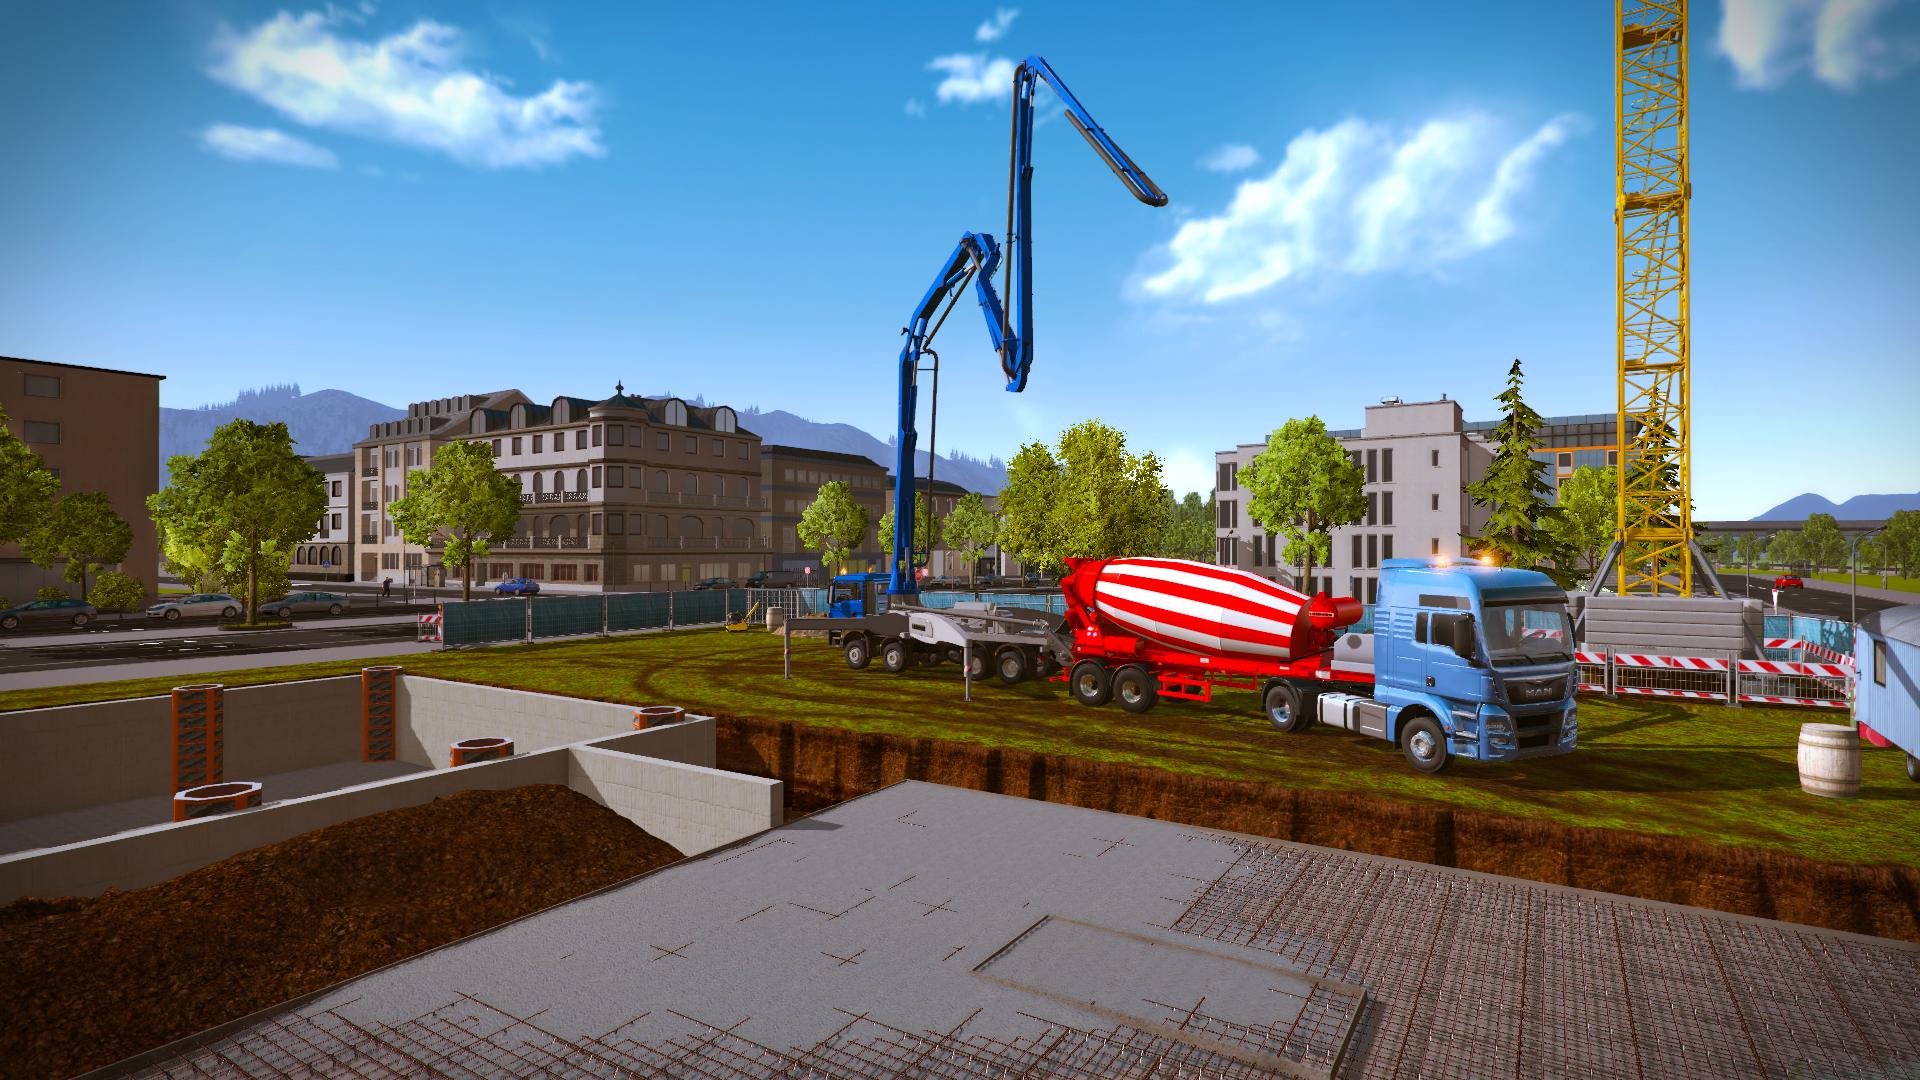 Screenshot №16 from game Construction Simulator 2015